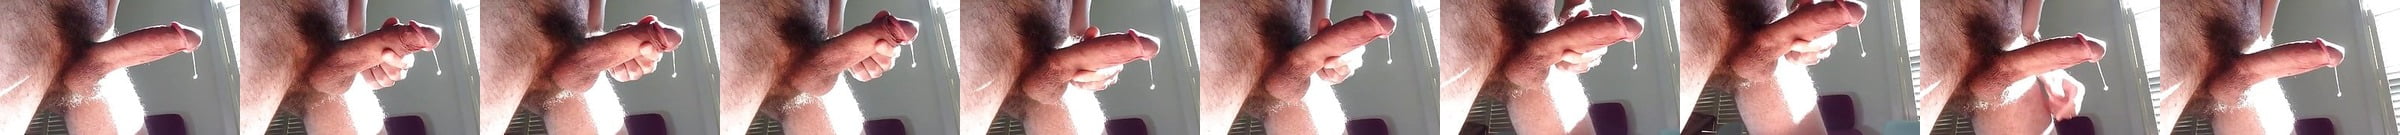 My Hairy Big Cock Cum Shot Now Free Man Porn 0c Xhamster